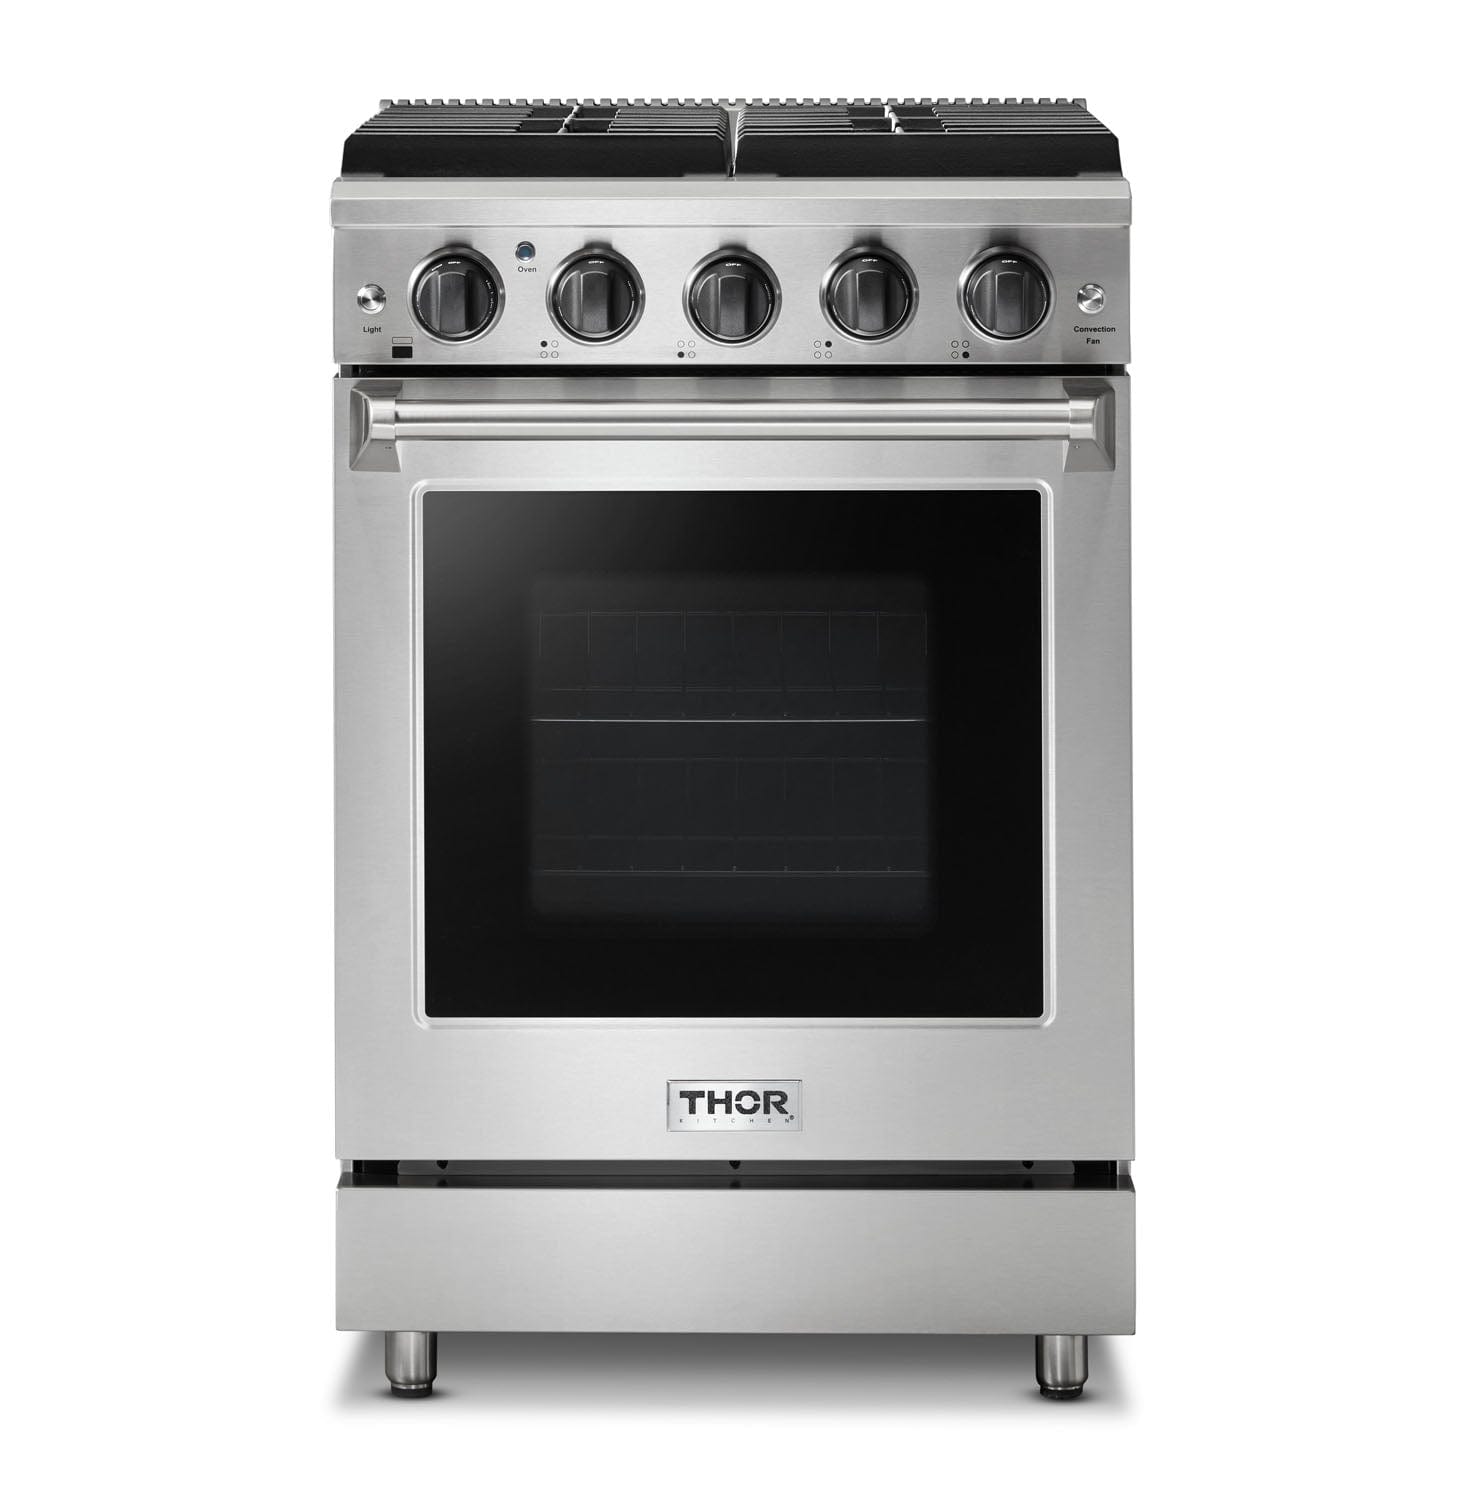 Thor Kitchen 24 in. Professional Gas Range in Stainless Steel LRG2401U Ranges LRG2401U Luxury Appliances Direct